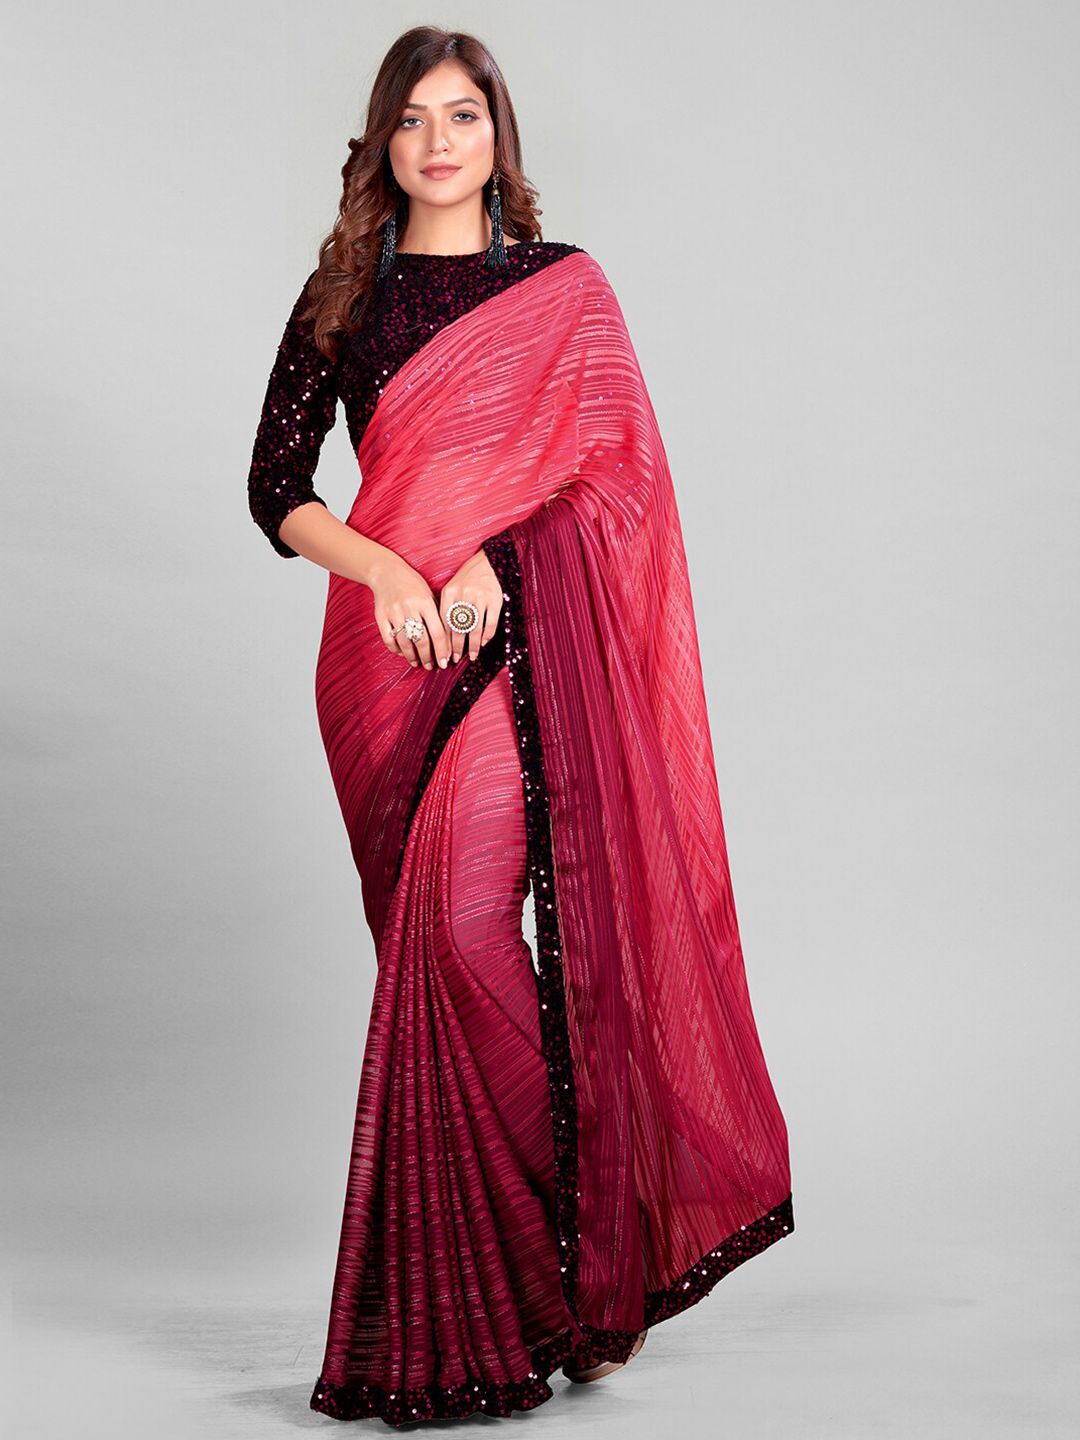 KALINI Striped Sequinned Saree Price in India